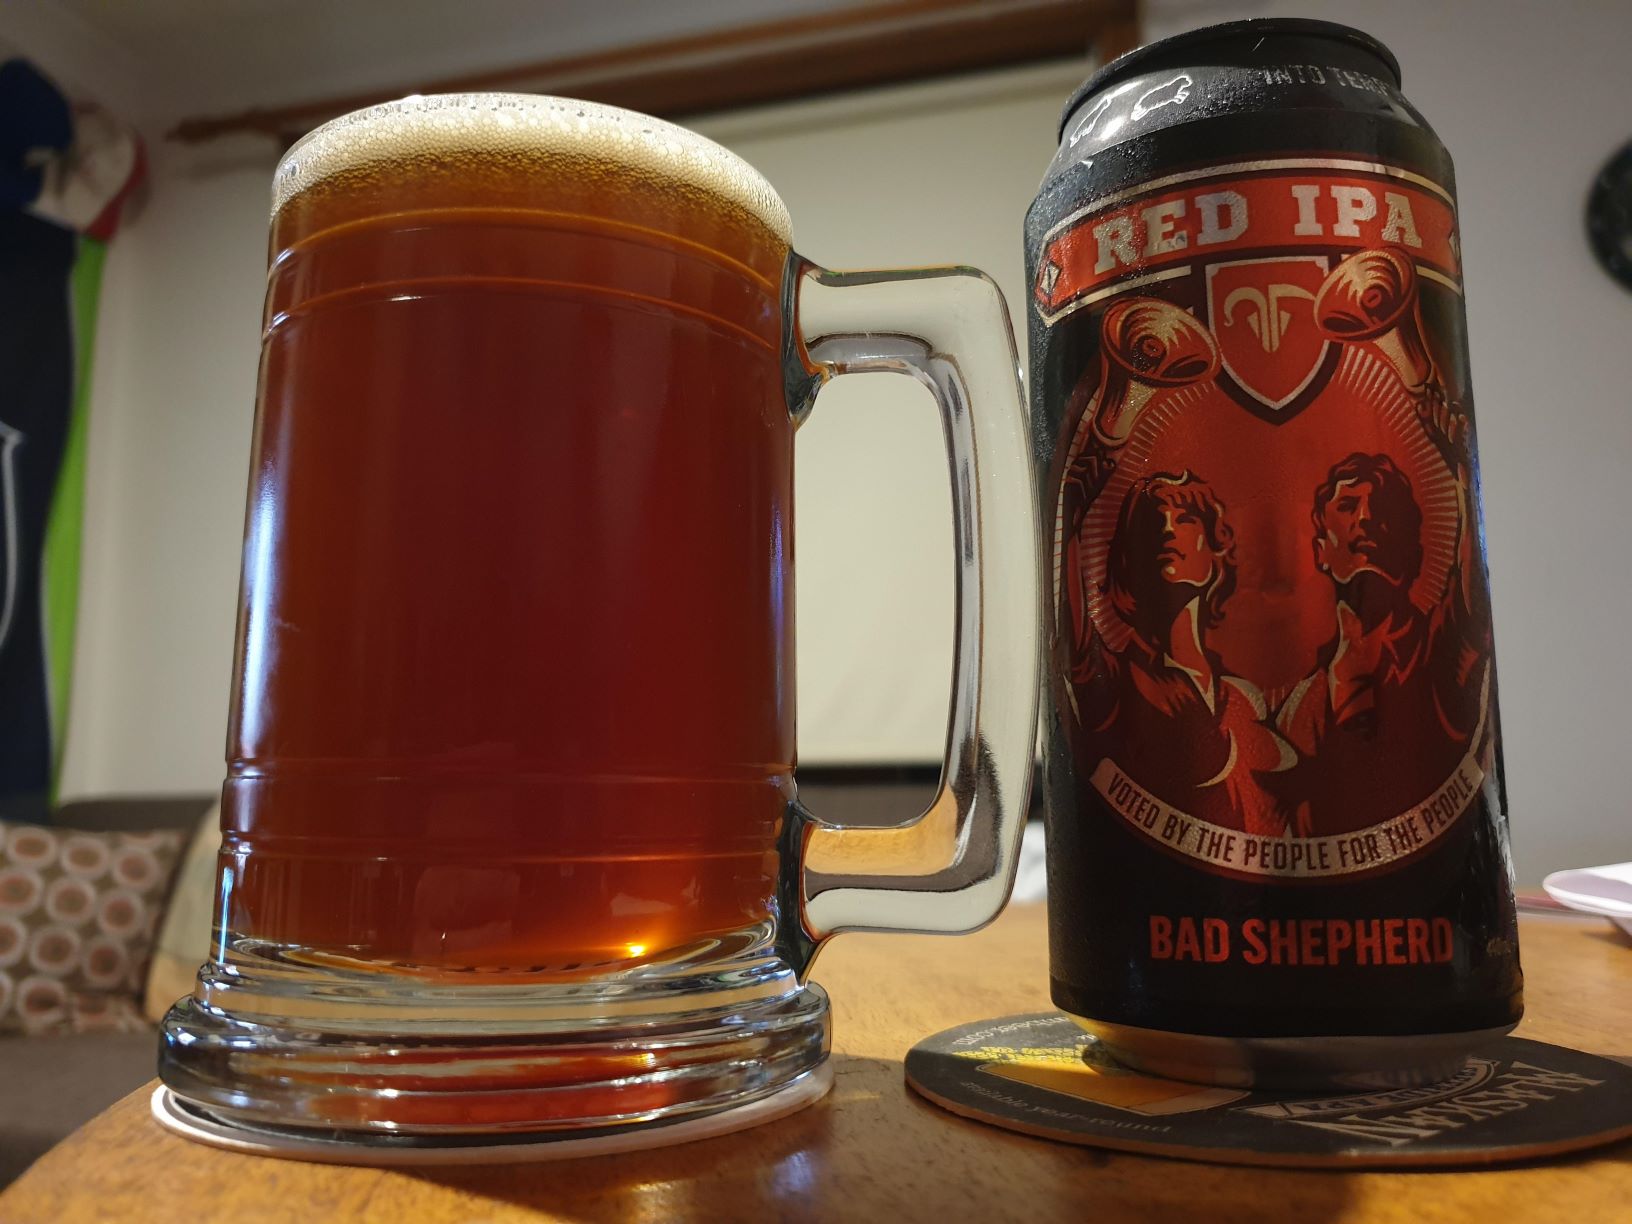 Red IPA by Bad Shepherd Brewing